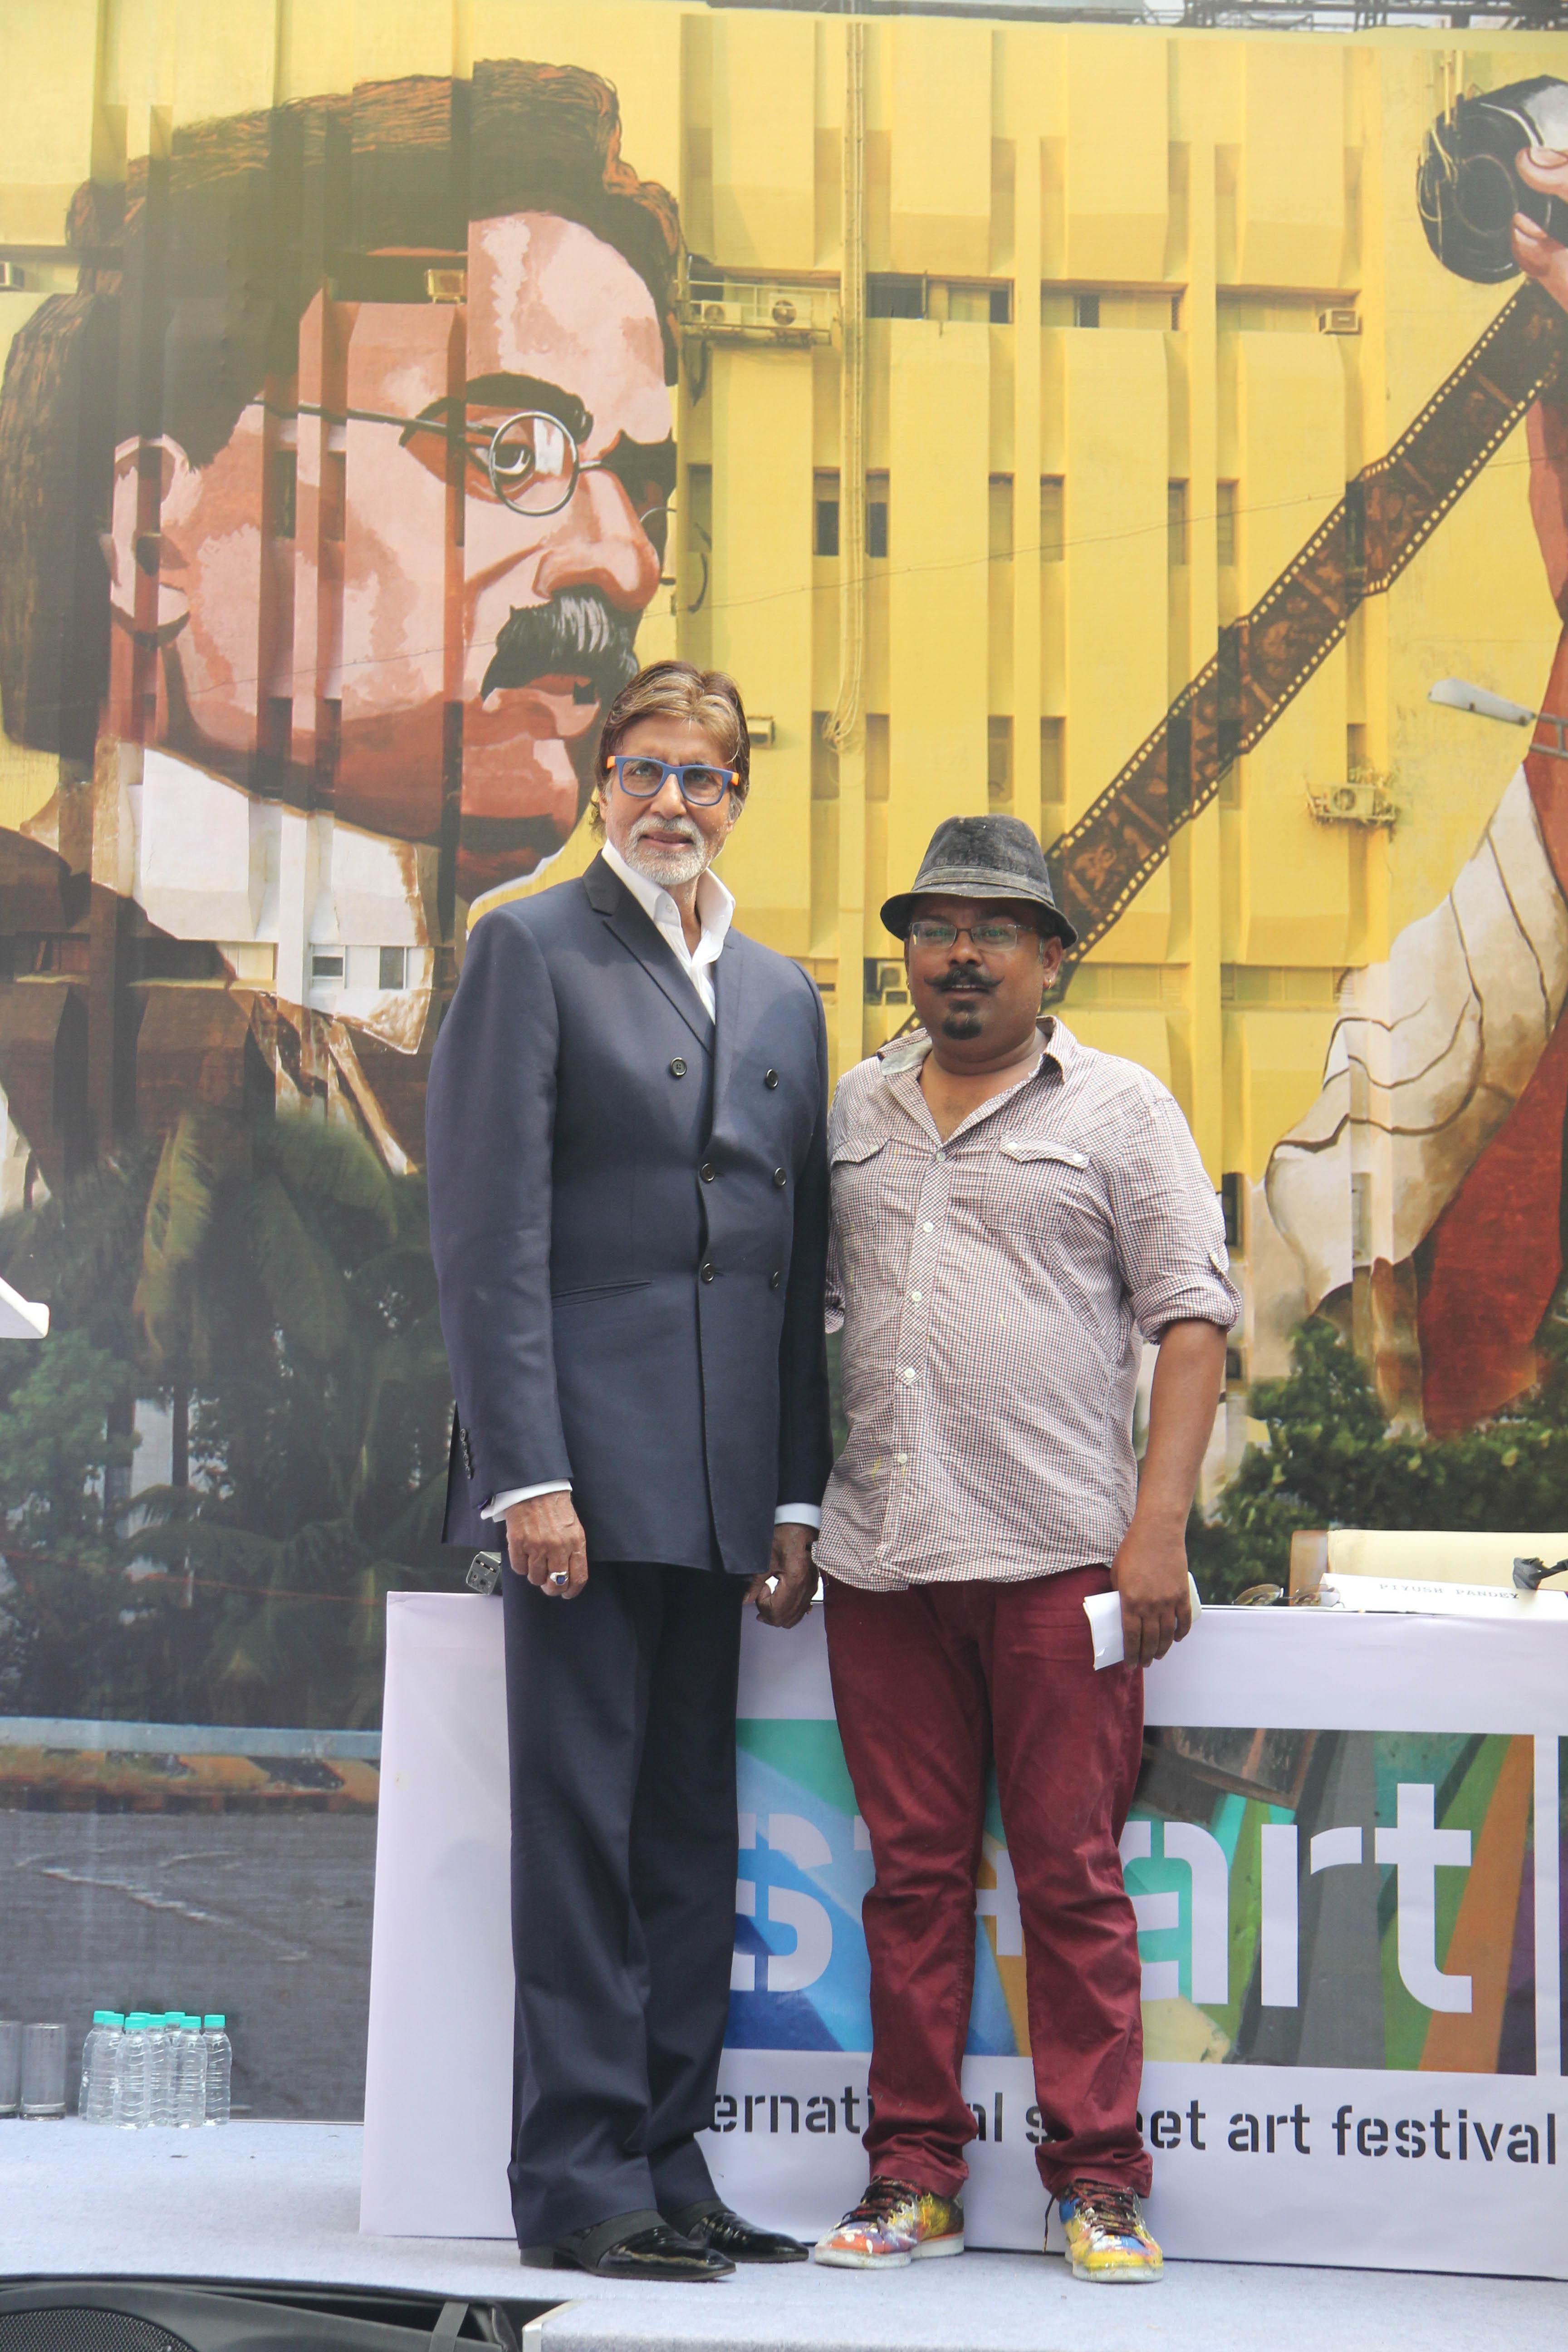 St art Mumbai Festival presents Mr Amitabh Bachchan and artist Ranjit Dahiya at the unveiling of the mural of Dadasaheb Phalke